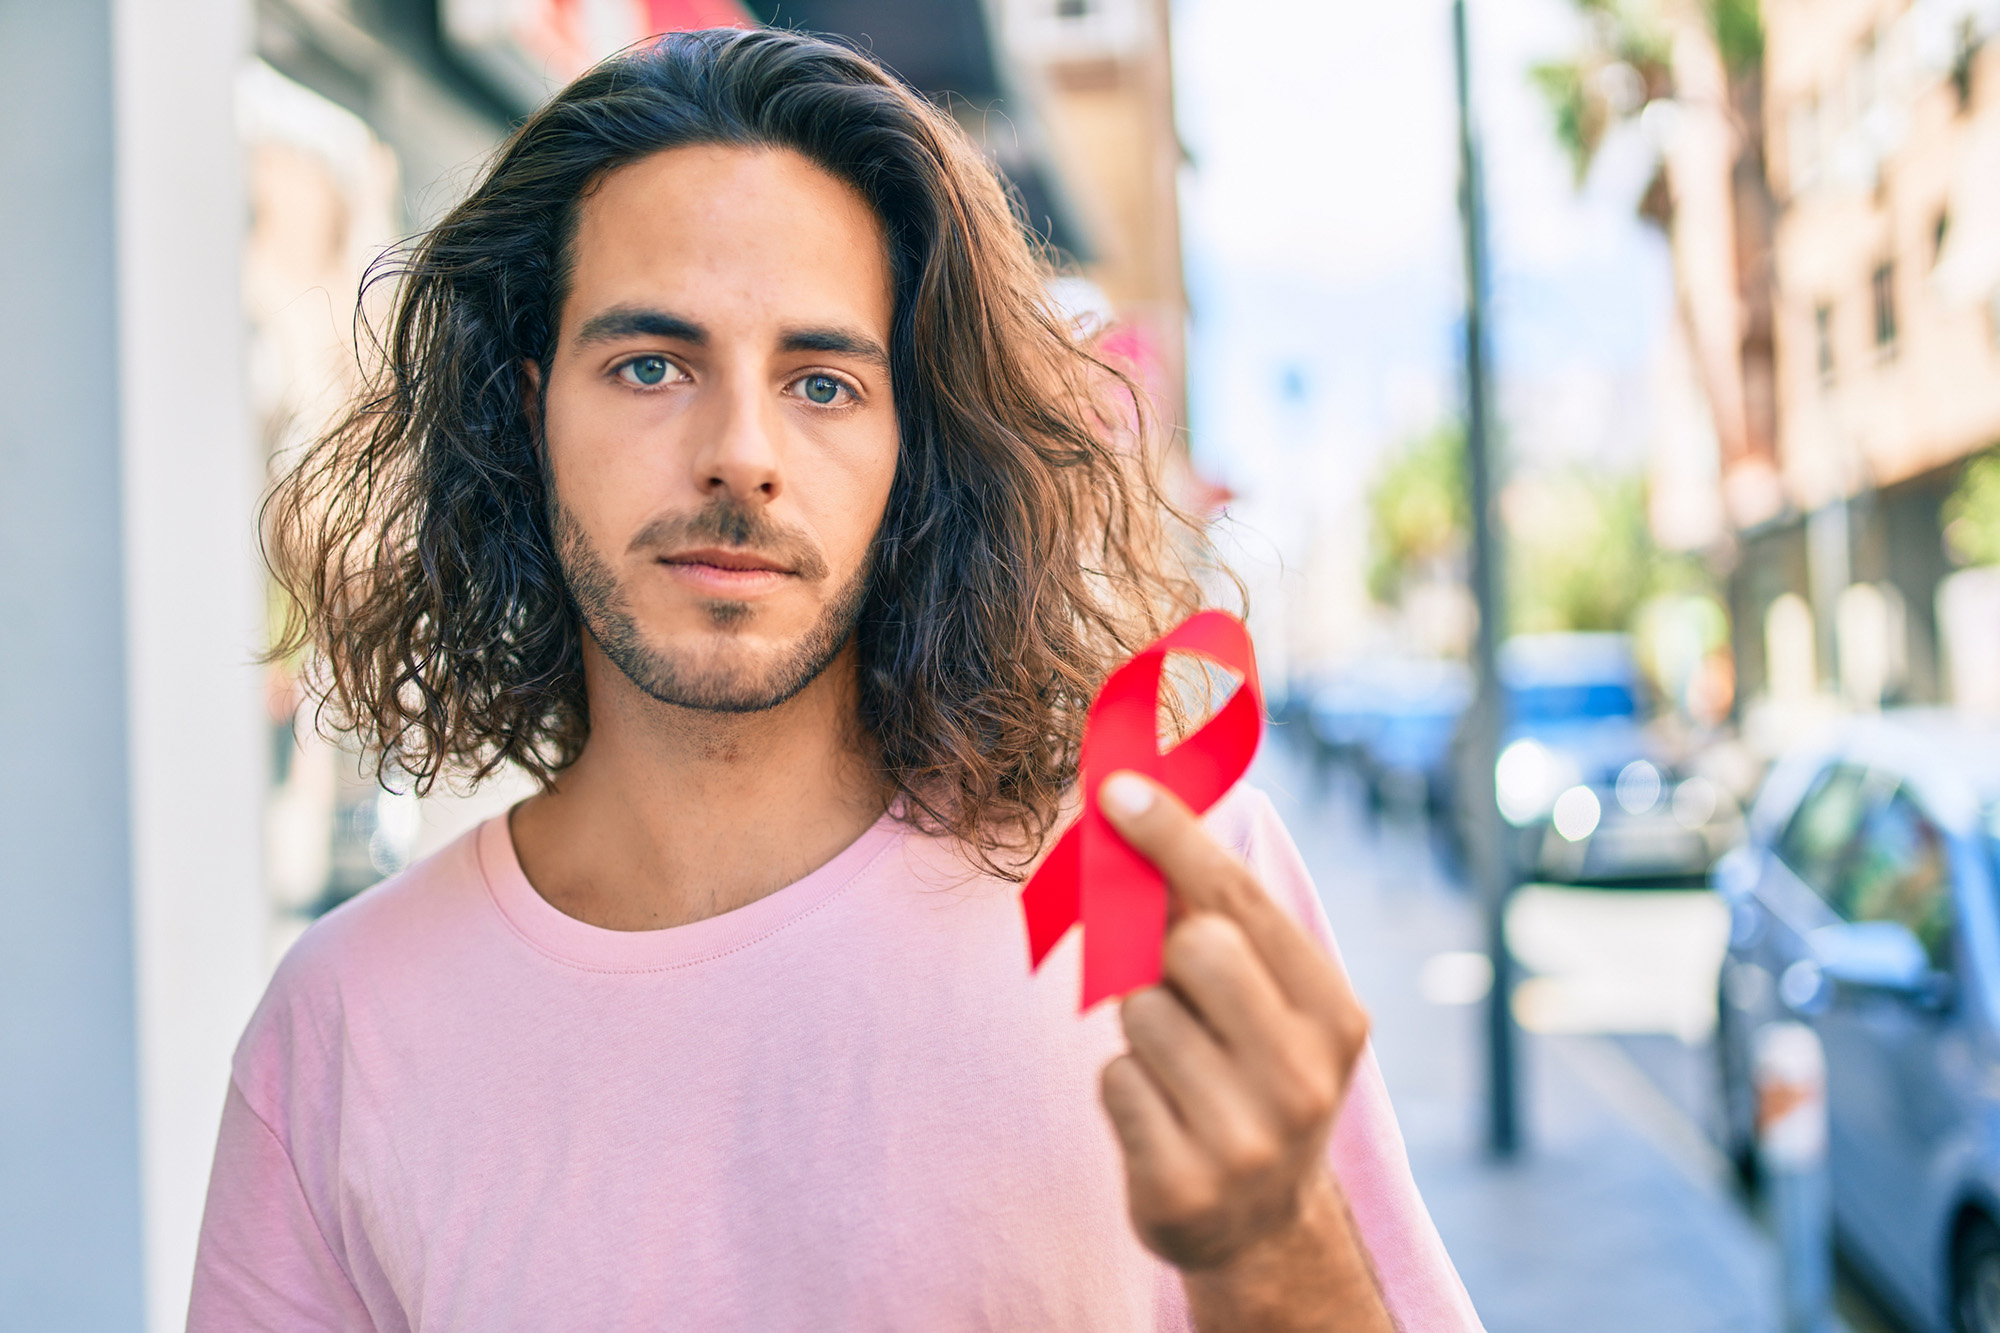 Man holding HIV awareness red ribbon